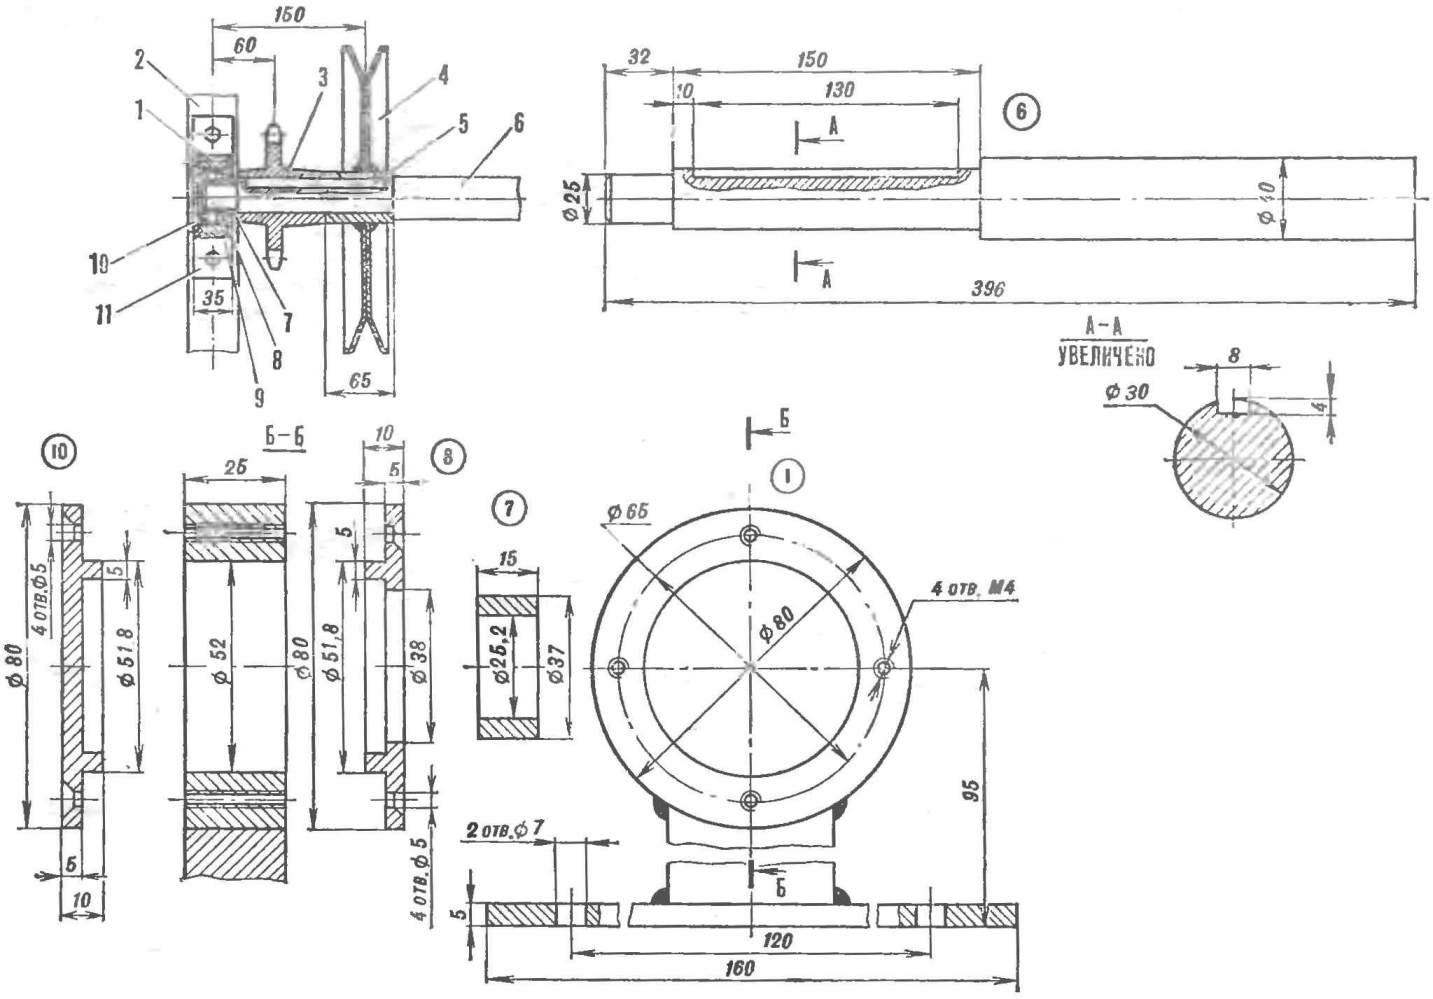 Fig. 4. The node axle main gear